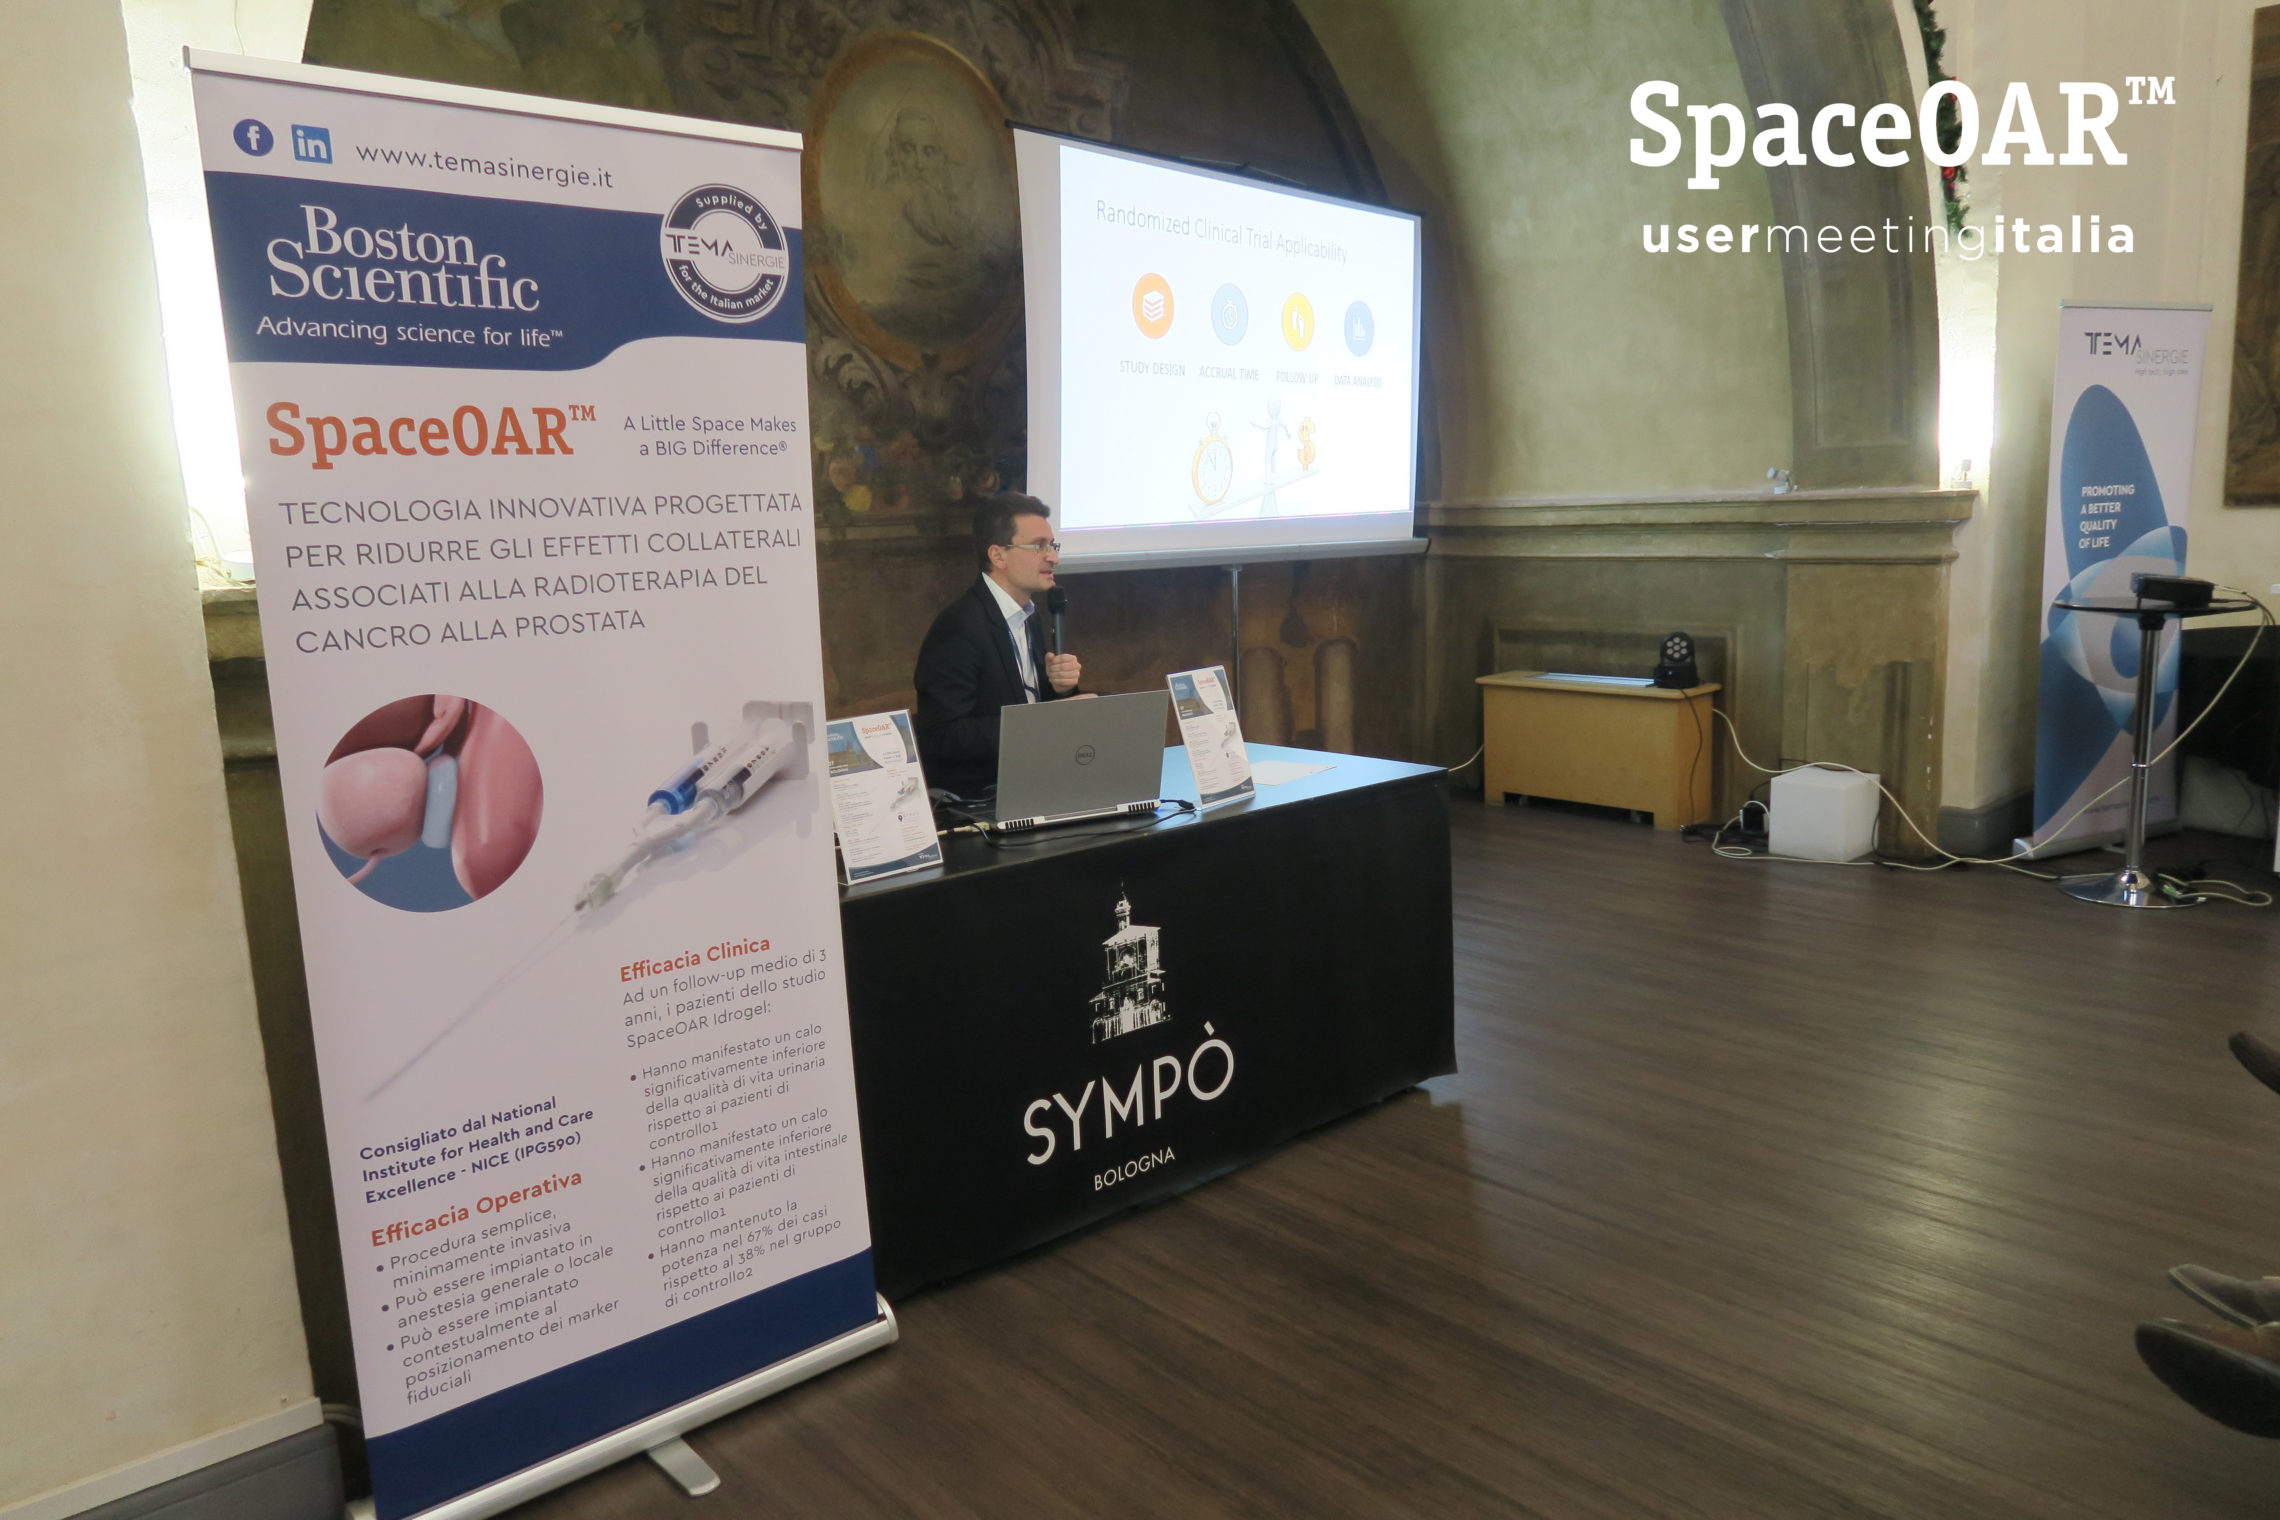 Di Napoli - Presentation at SpaceOAR User Meeting Italia